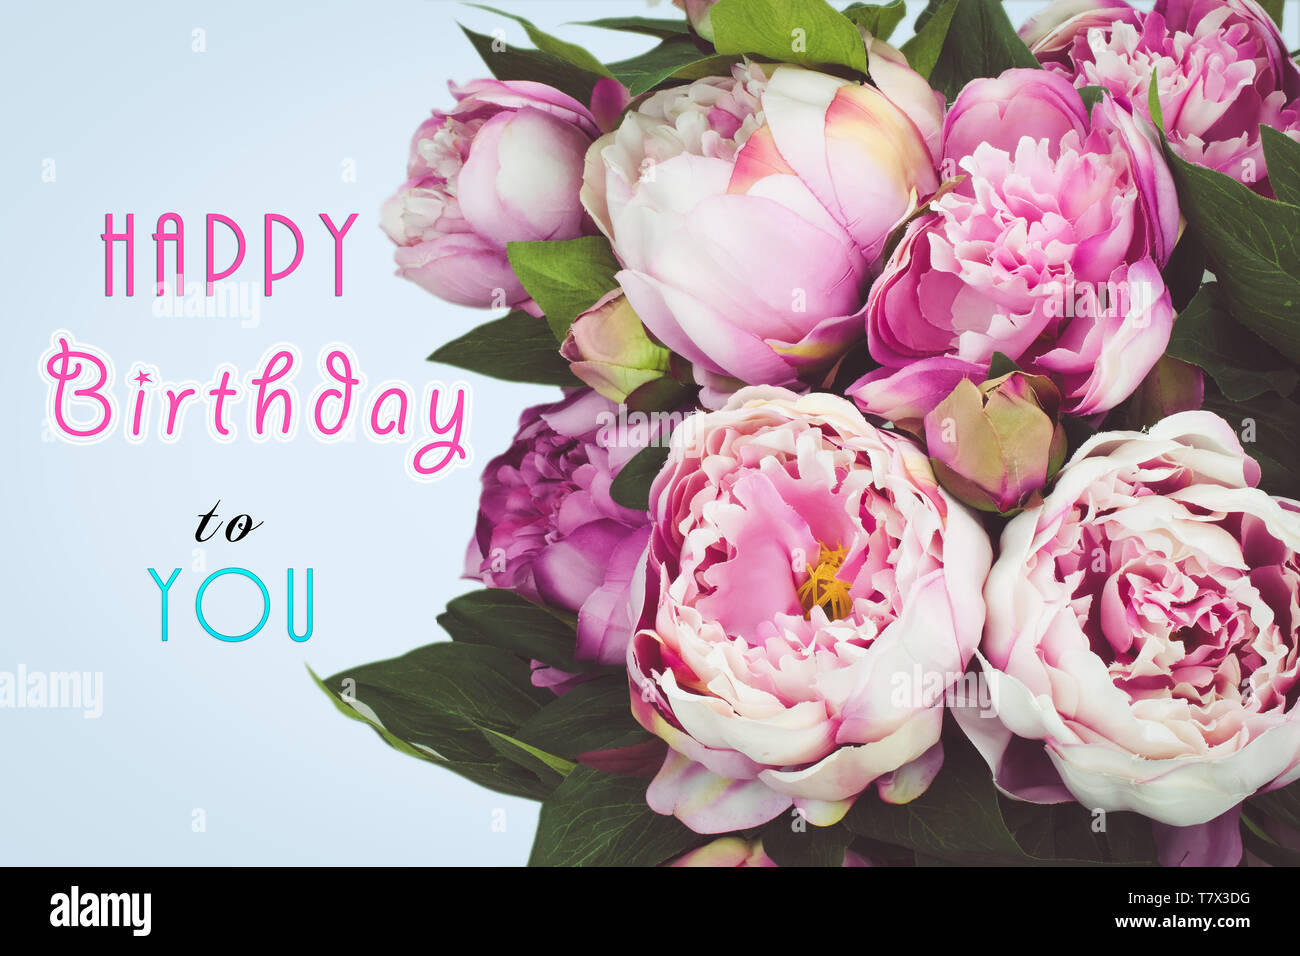 Happy Birthday Card Avec Fleurs De Pivoine Rose Fond Bleu Photo Stock Alamy